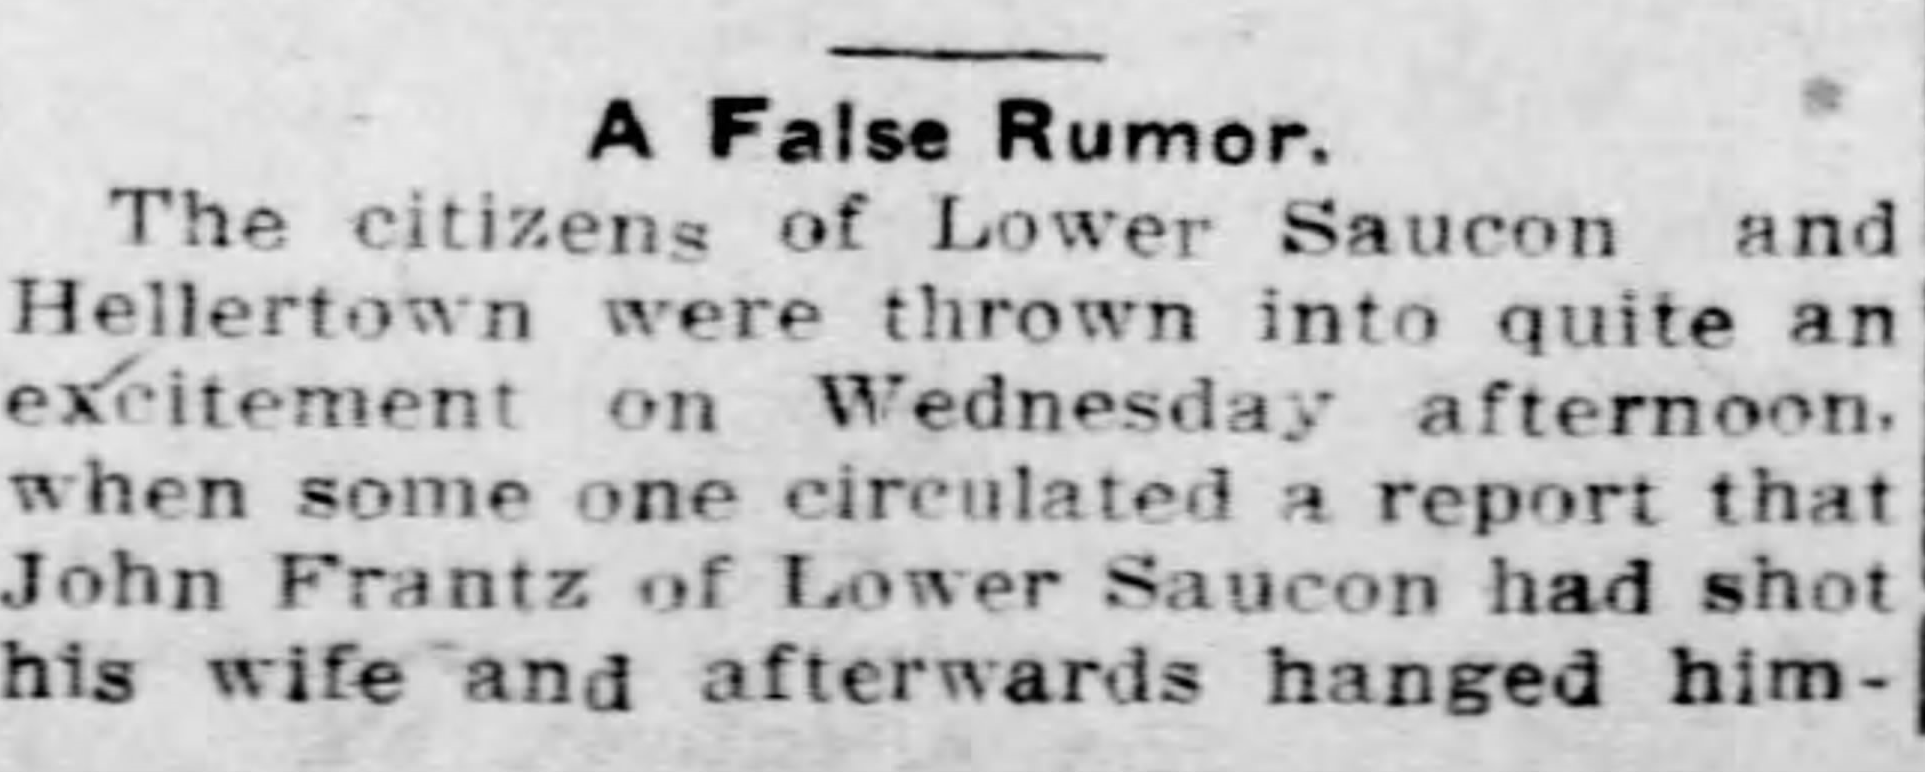 Olden Days: 'False Rumor' Caused Stir in Hellertown in 1912 - Saucon Source